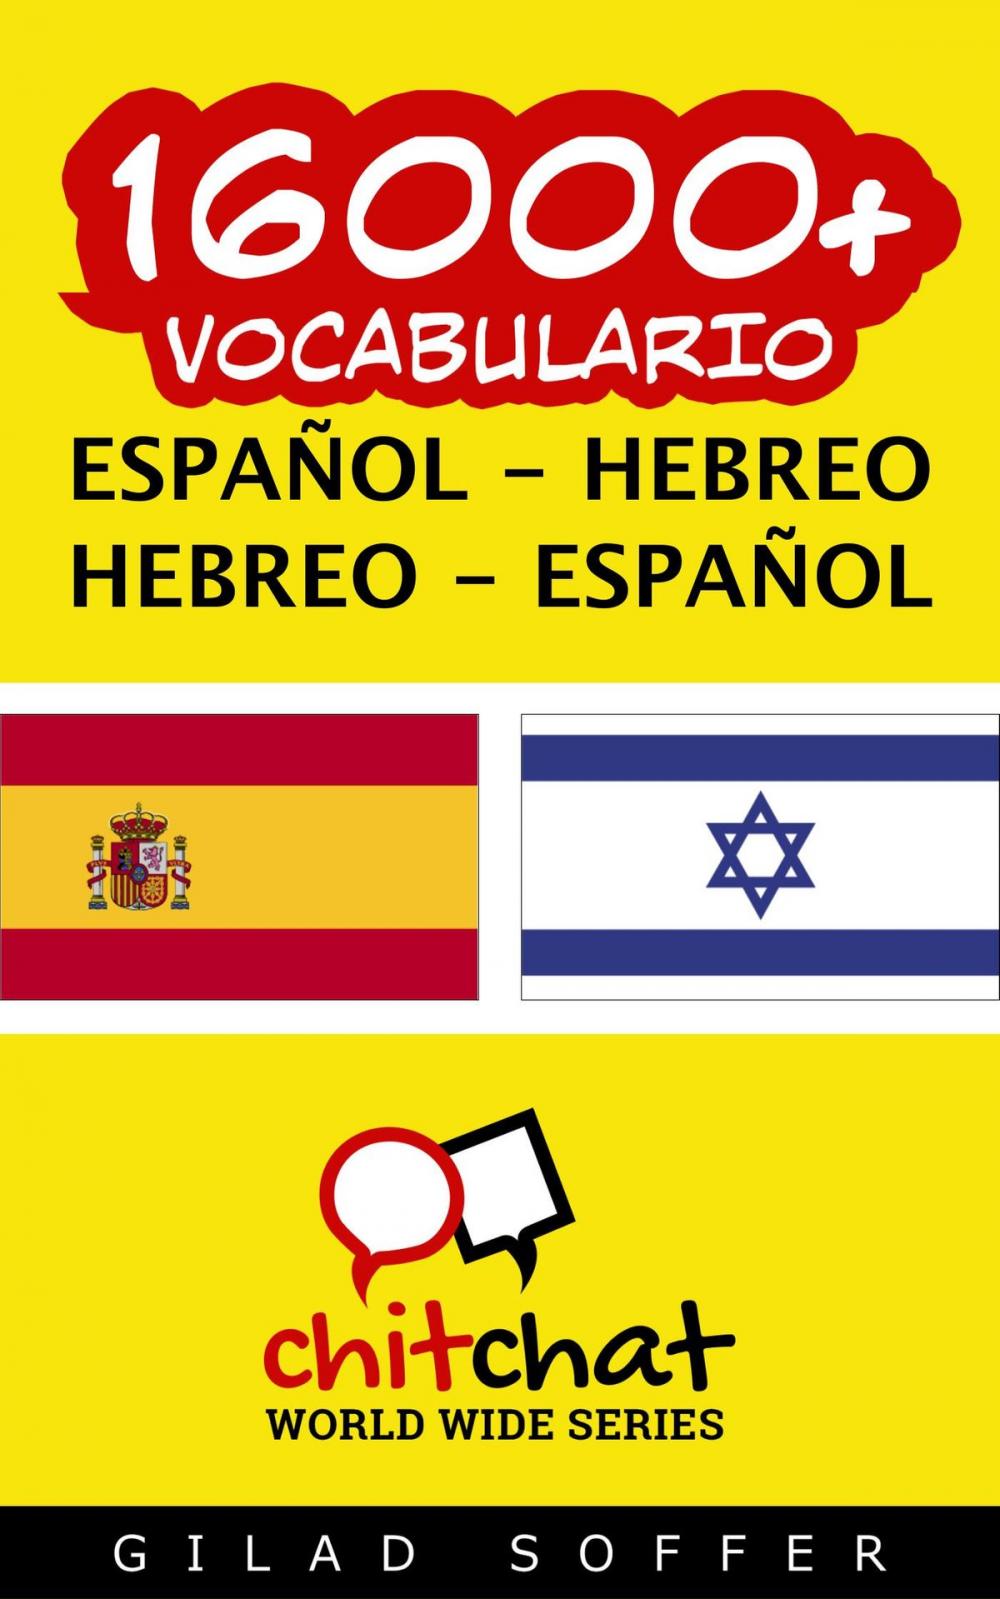 Big bigCover of 16000+ vocabulario español - hebreo